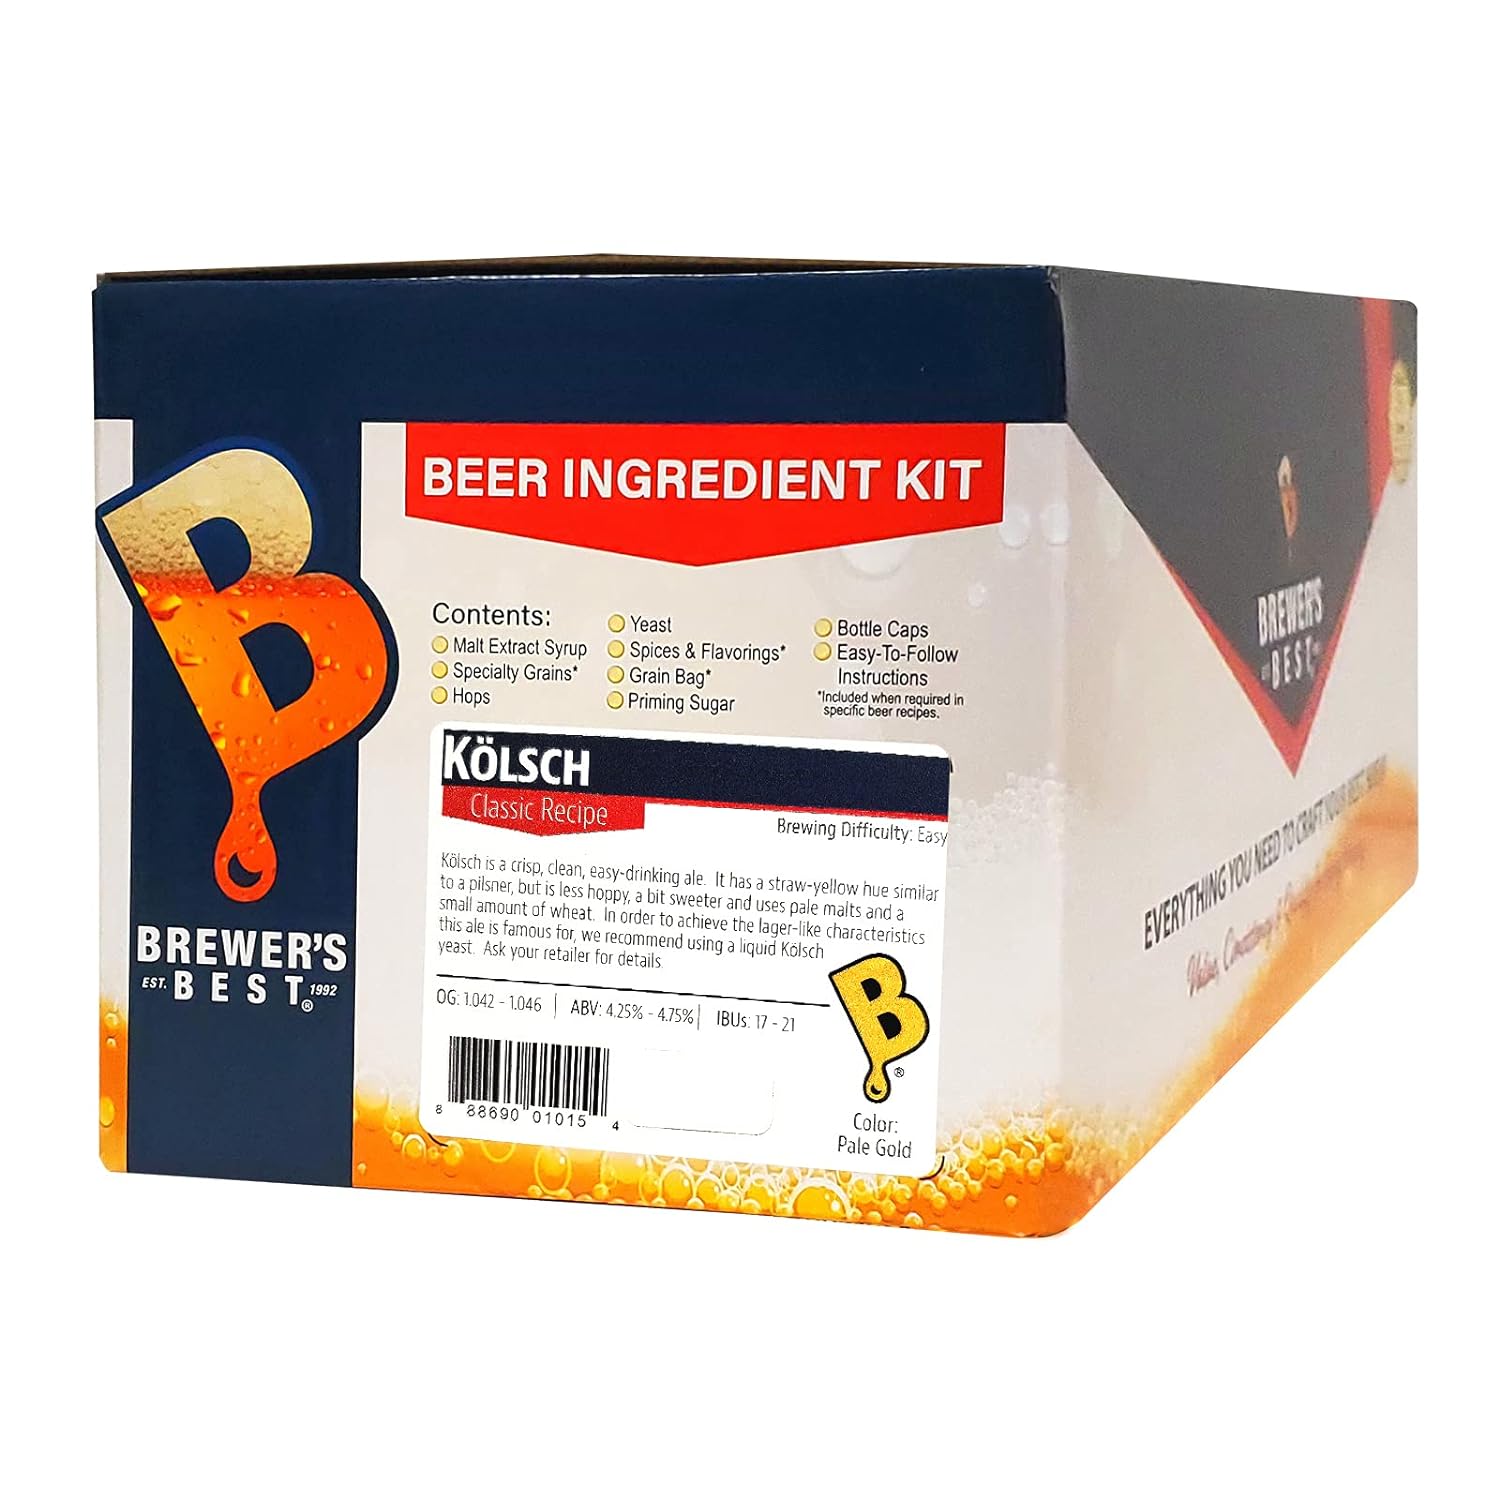 Brewer’s Best 1015 Home Brew Beer Ingredient Kit Review